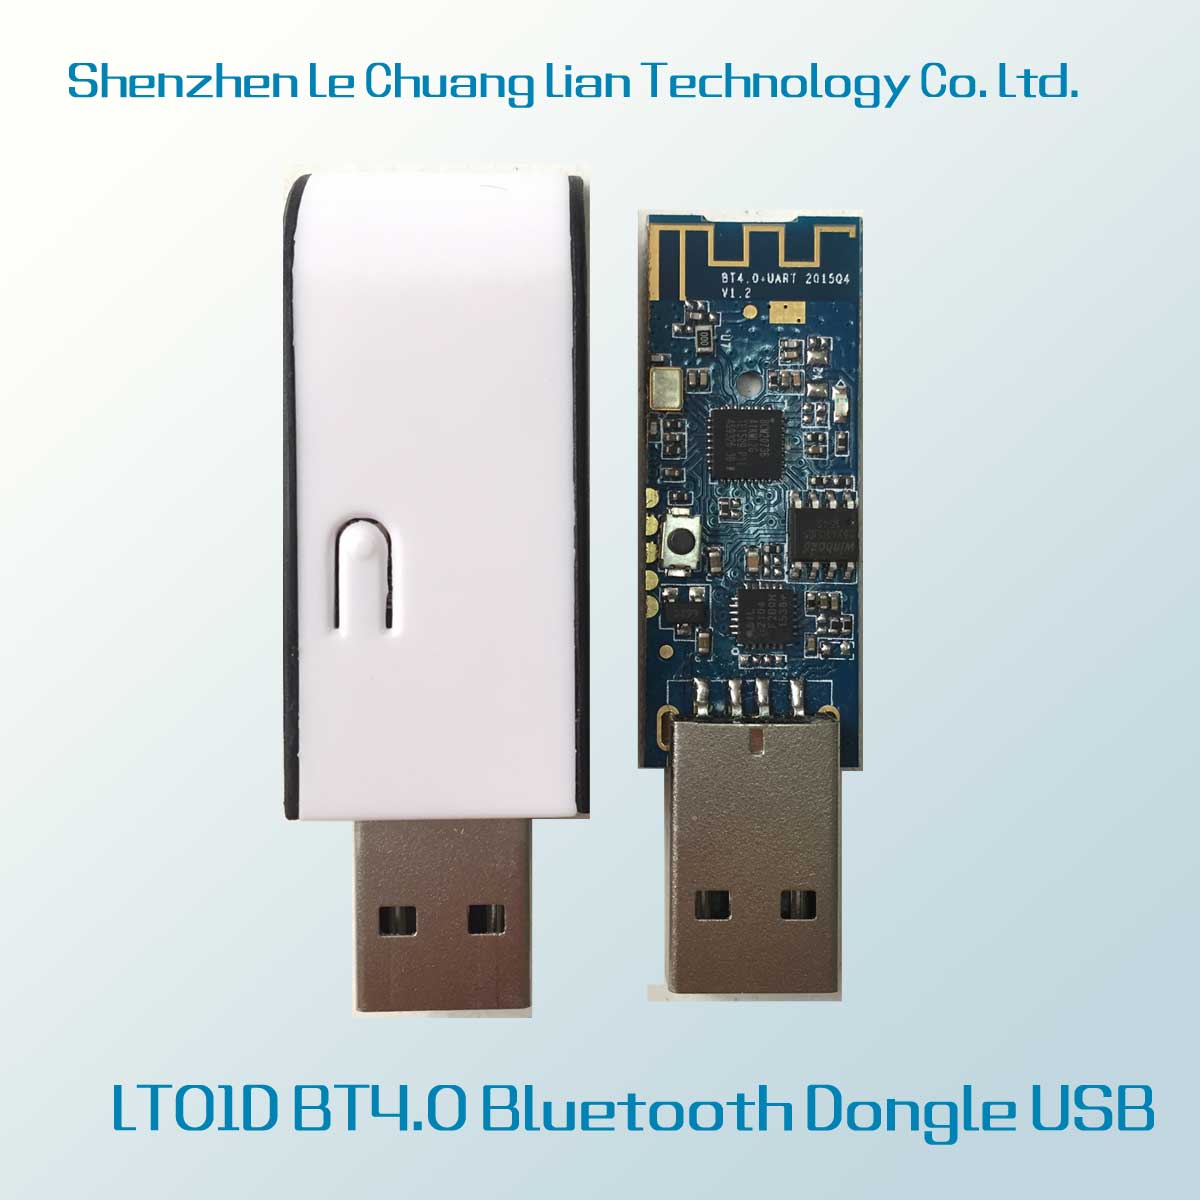 LT01D BT4.0 Bluetooth Dongle USB